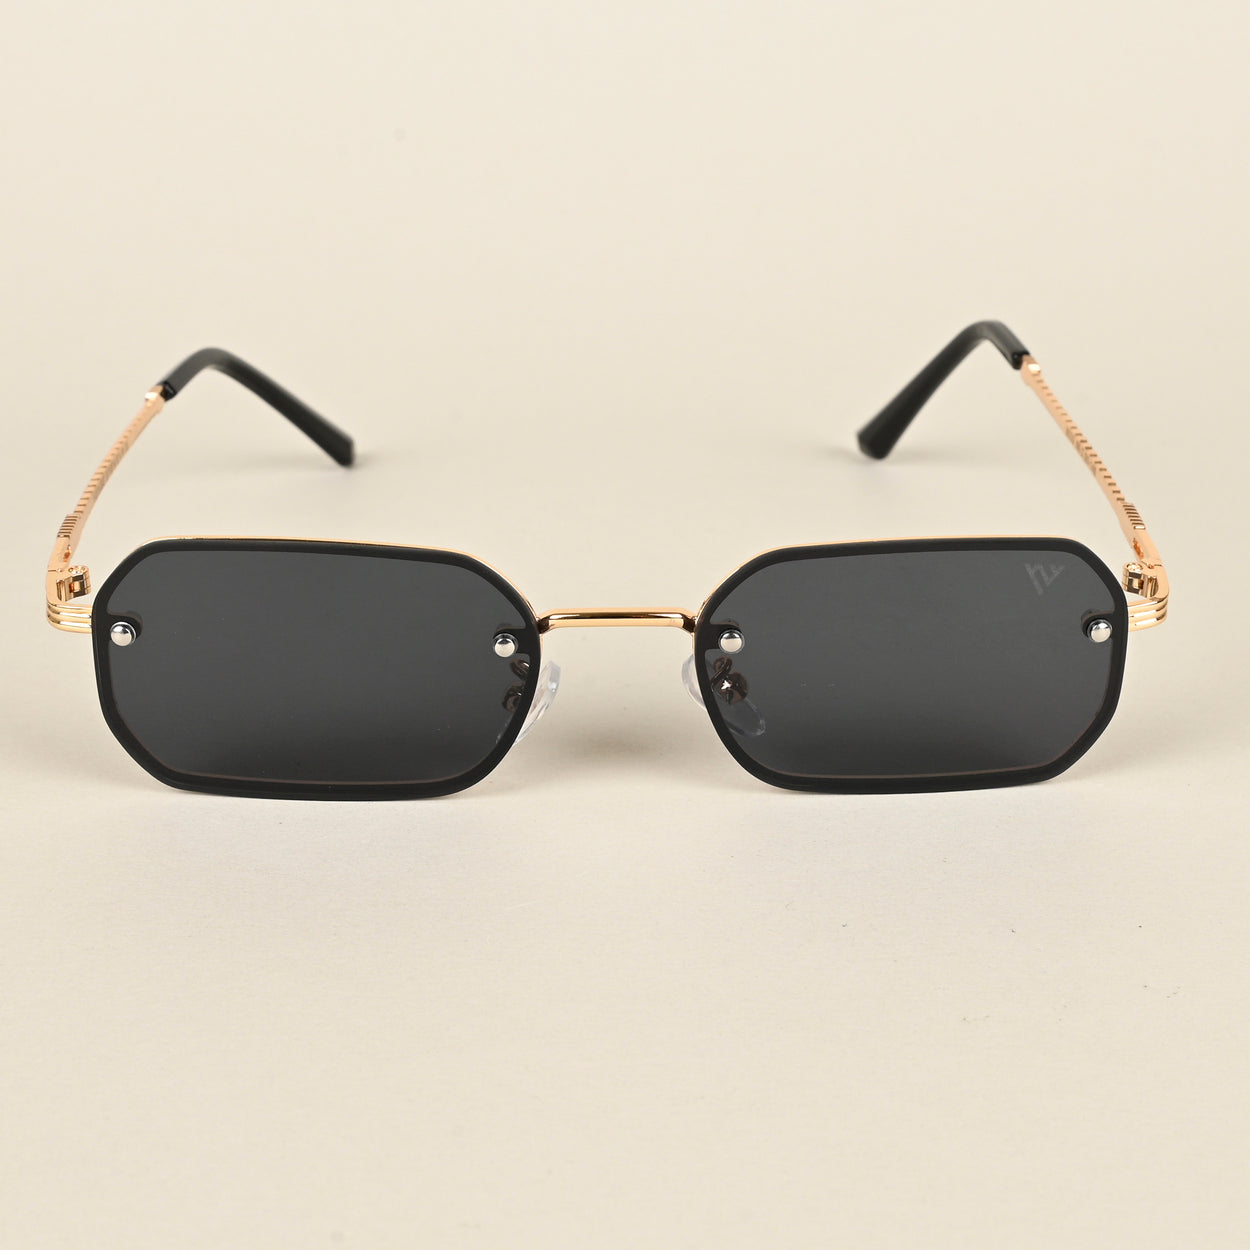 Voyage Black Rectangle Sunglasses for Men & Women (9032MG4321)